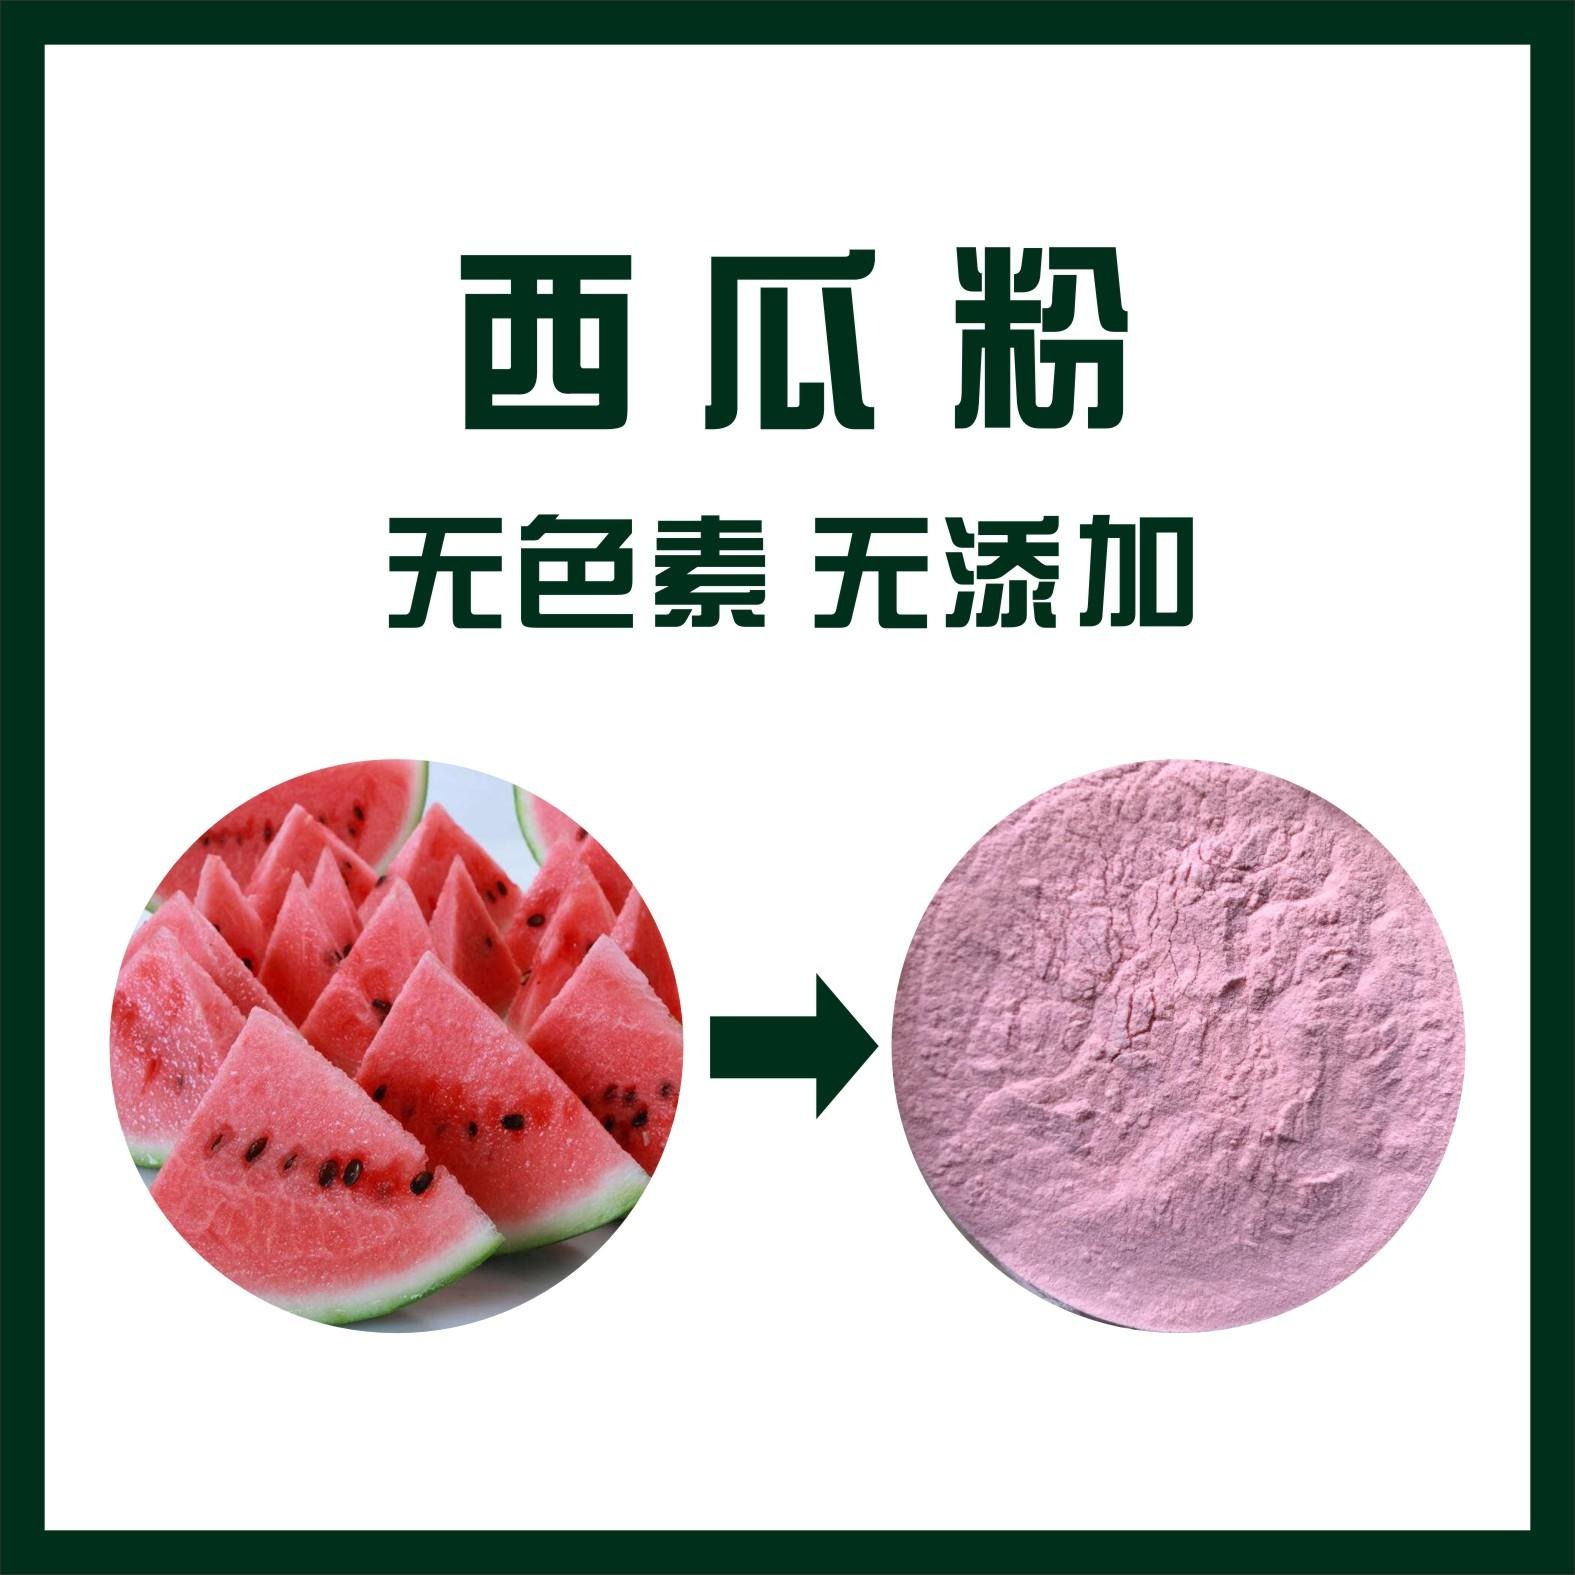 西瓜粉,Watermelon powder